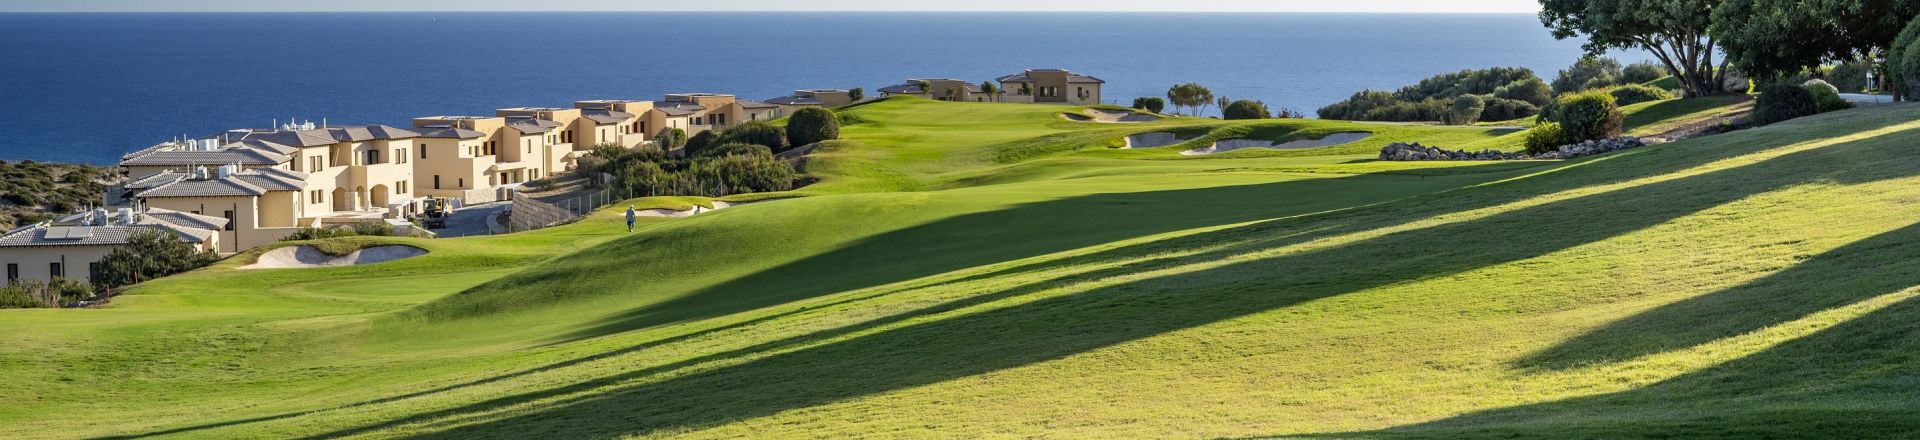 Cyprus golf holidays at Aphrodite Hills